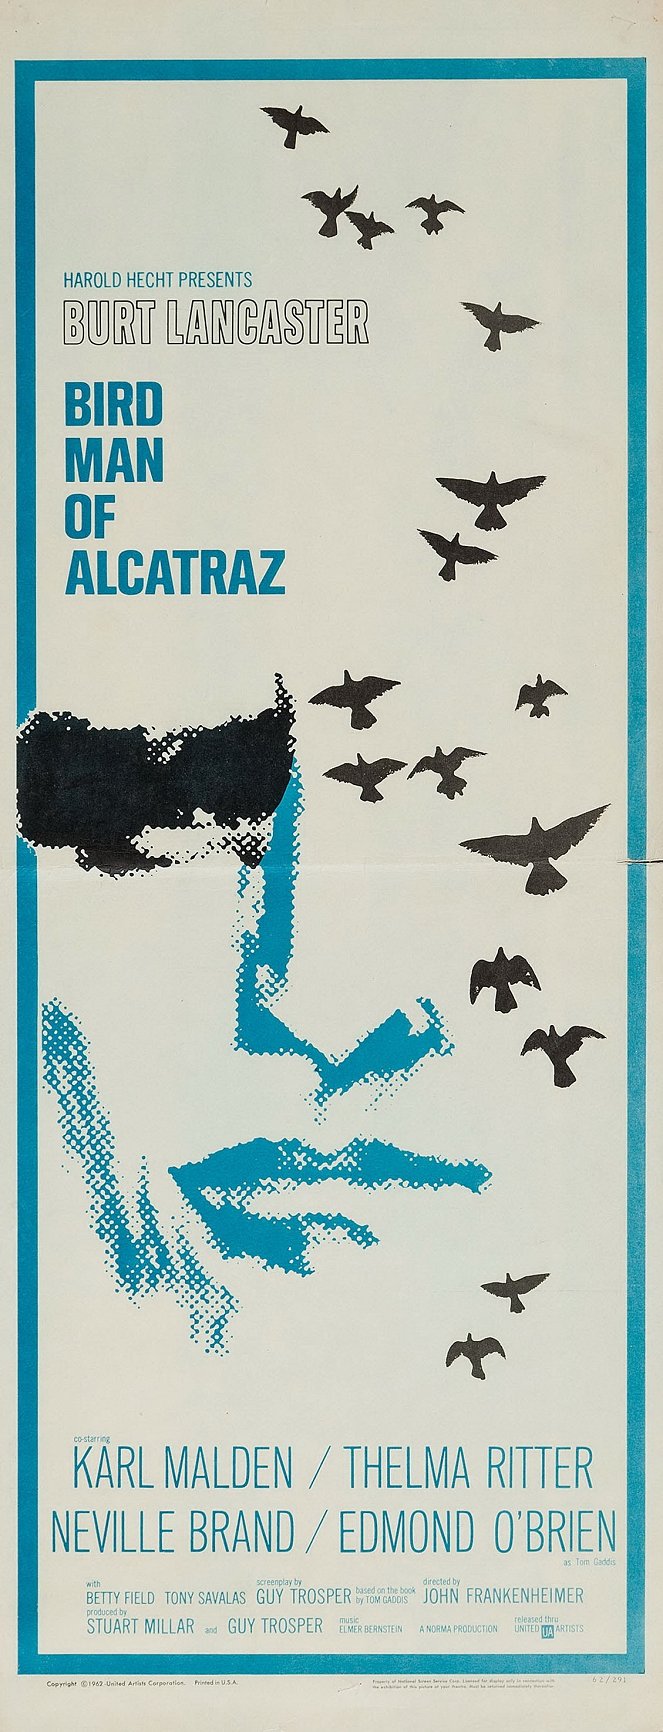 Birdman of Alcatraz - Posters